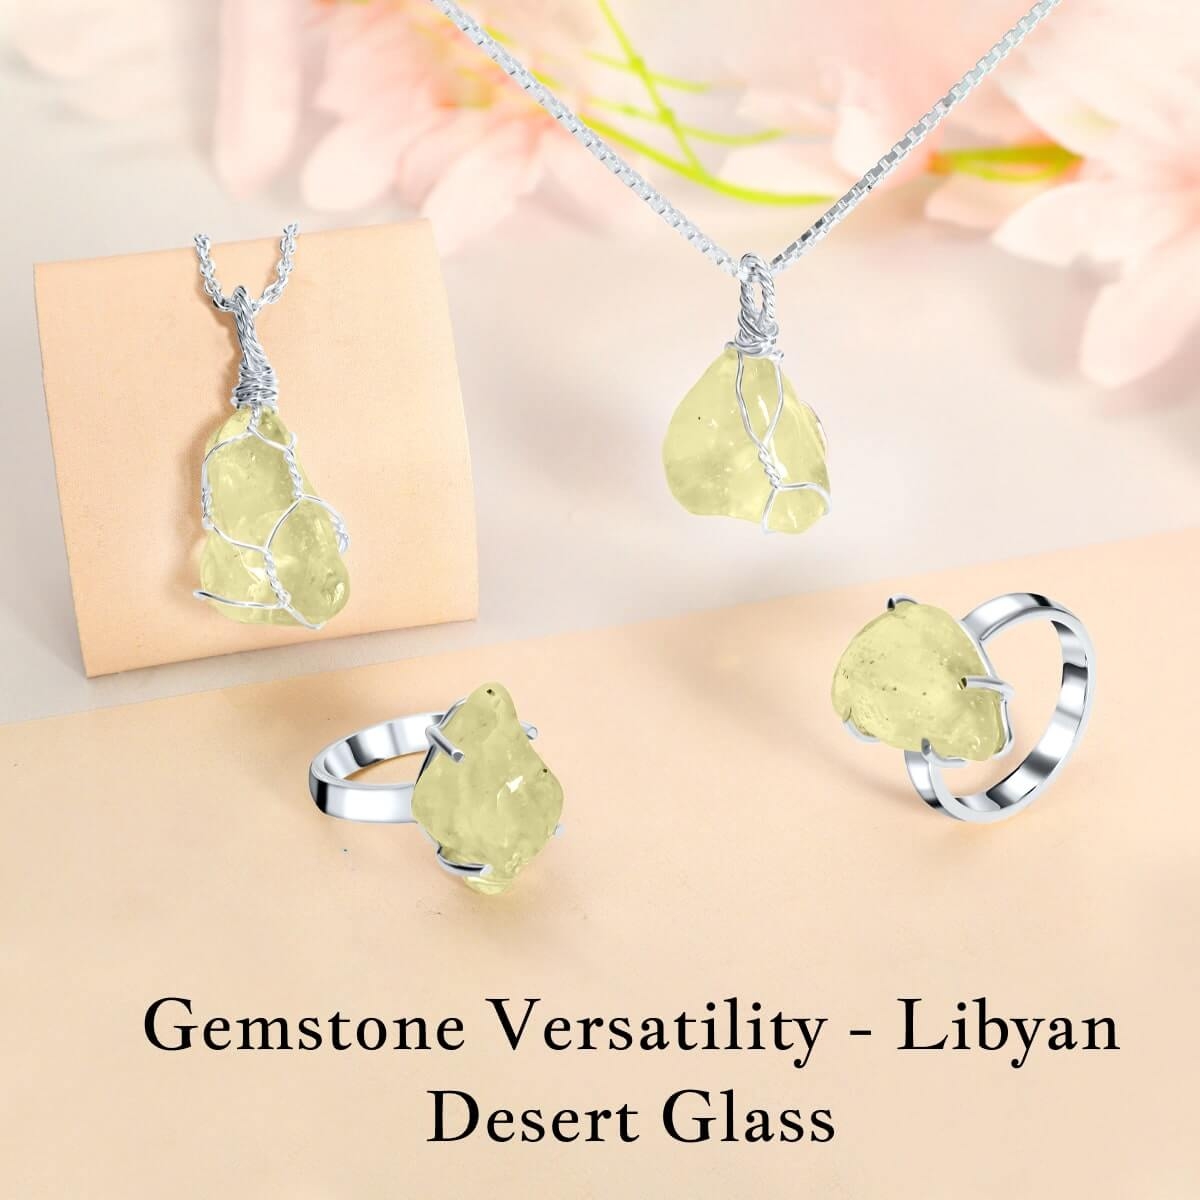 Uses of Libyan Desert Glass Gem